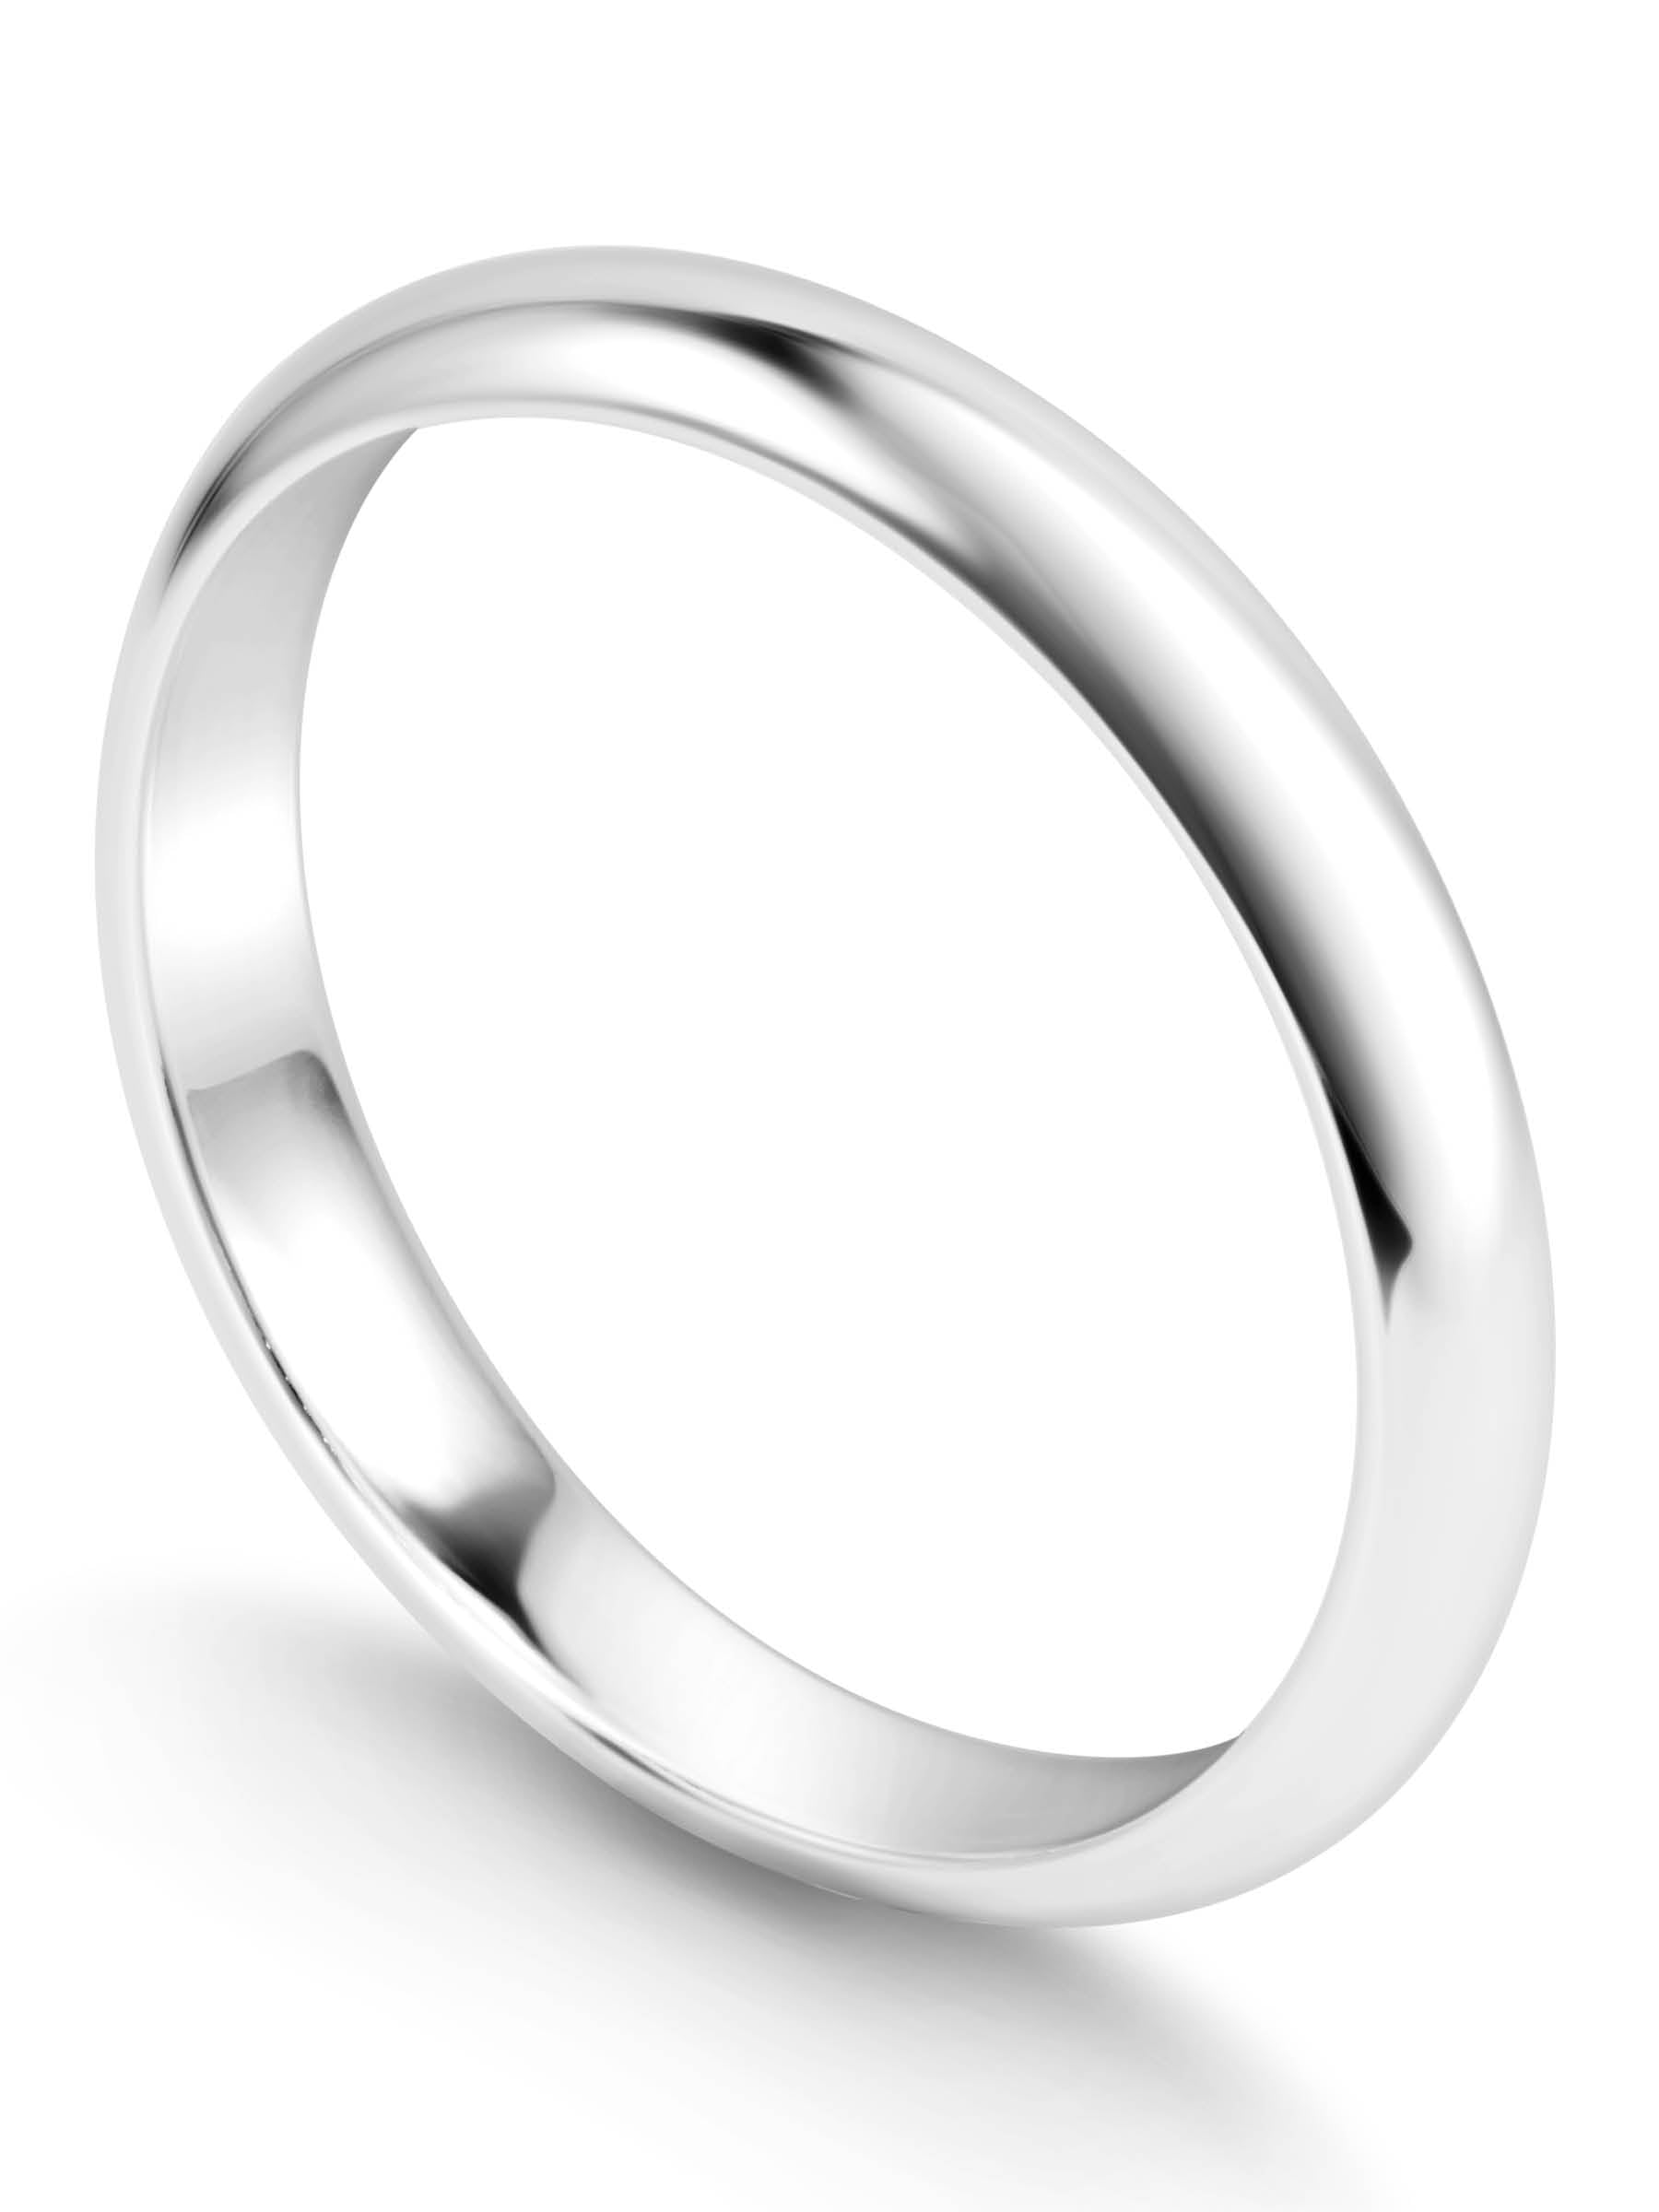 Silver ring men | Plain ring 5 mm | Design Mila Silver | Free shipping!